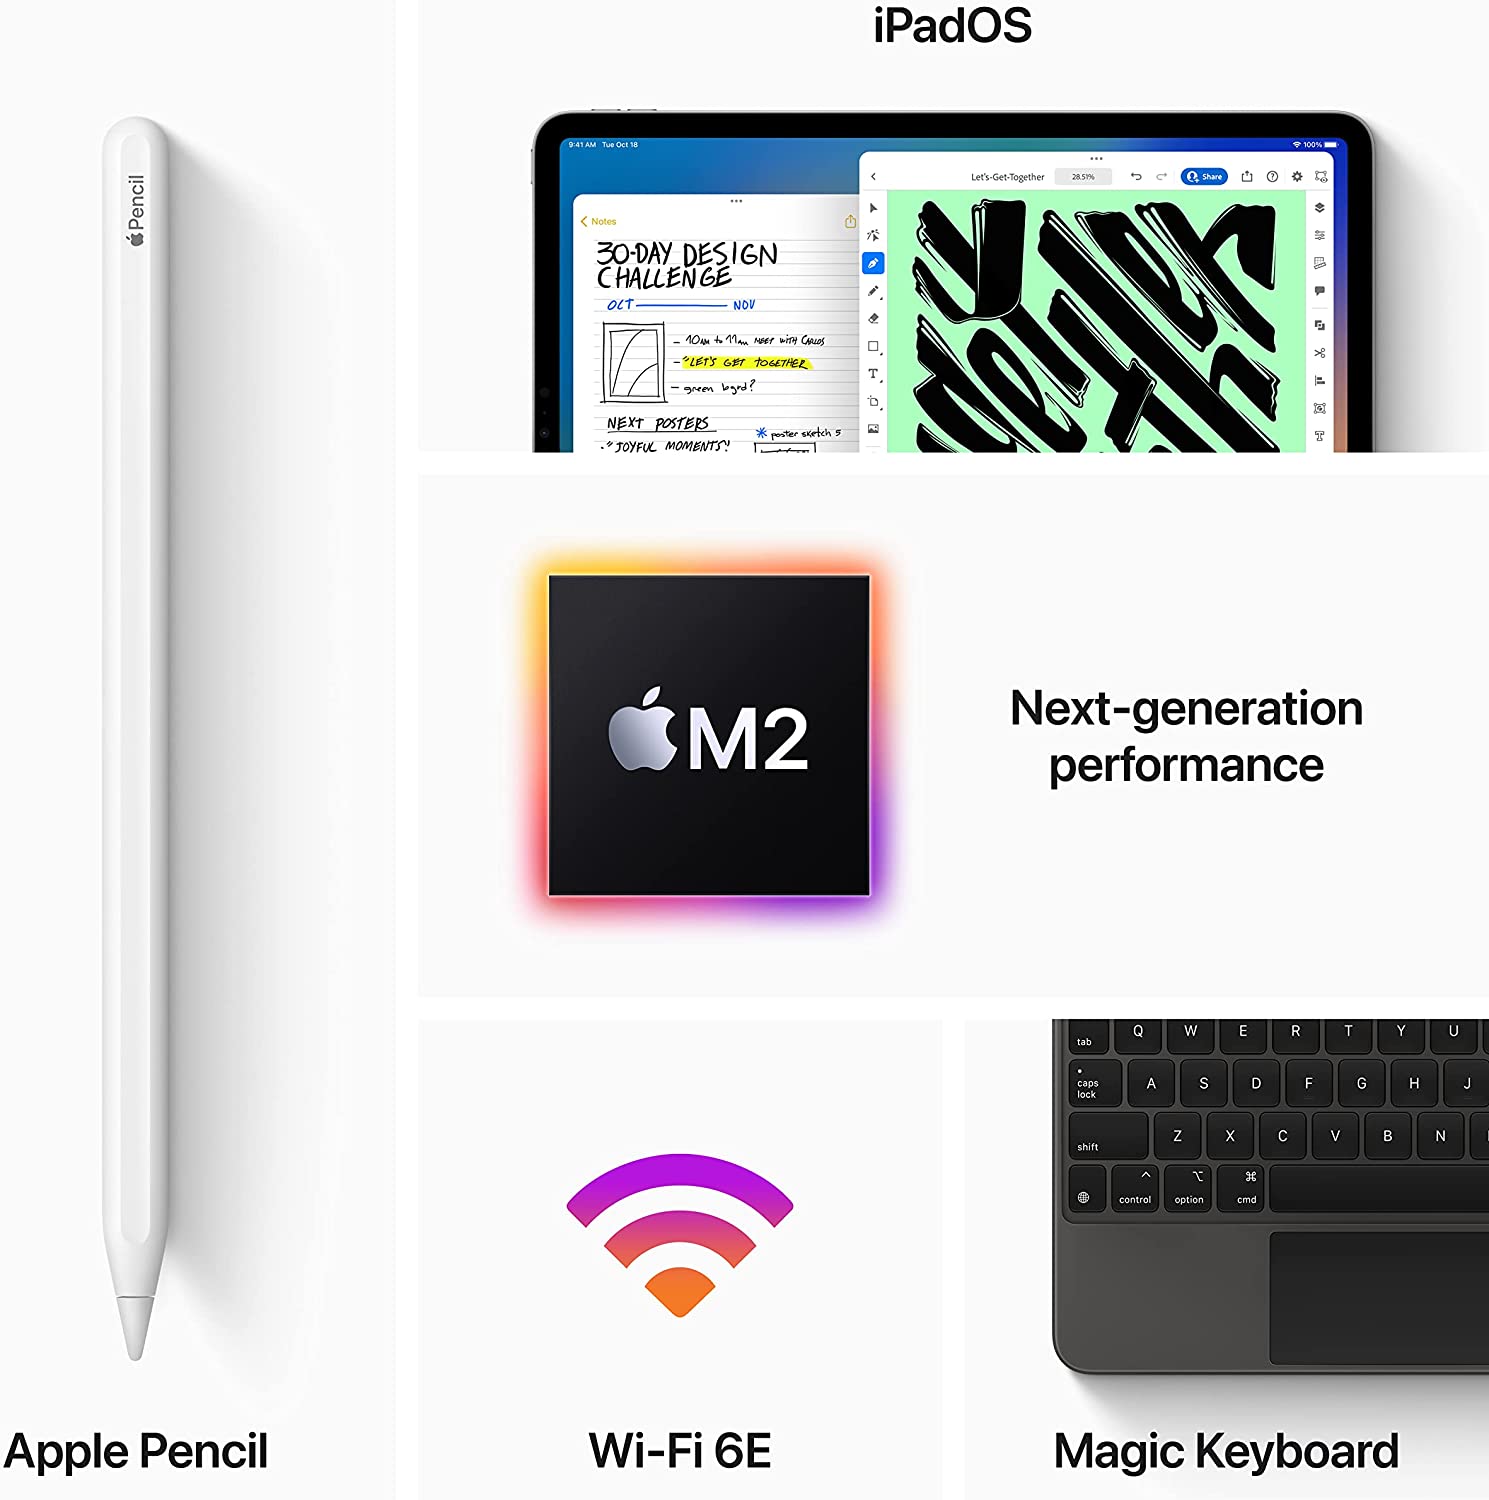 2022 Apple iPad Pro M2 11 inches 128GB (Wifi + Cellular) - 4th Generation